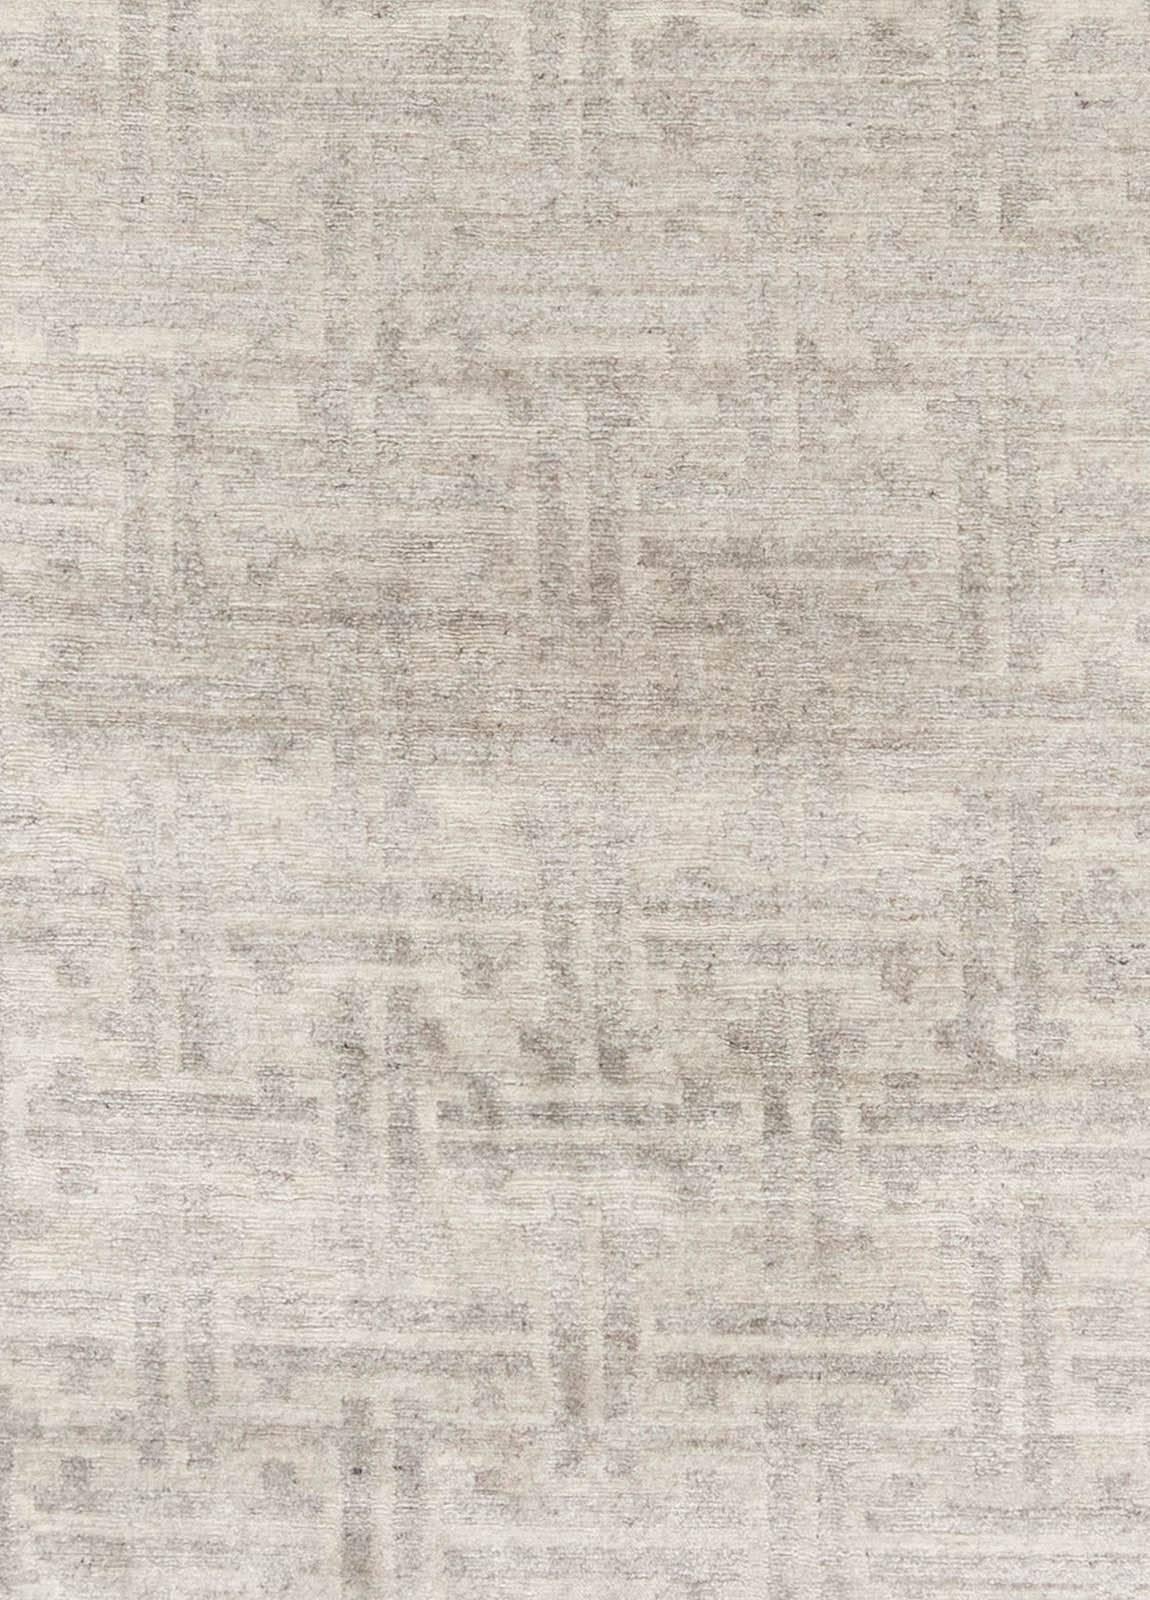 Contemporary Terra rug in Natural Wool by Doris Leslie Blau.
Size: 9'0